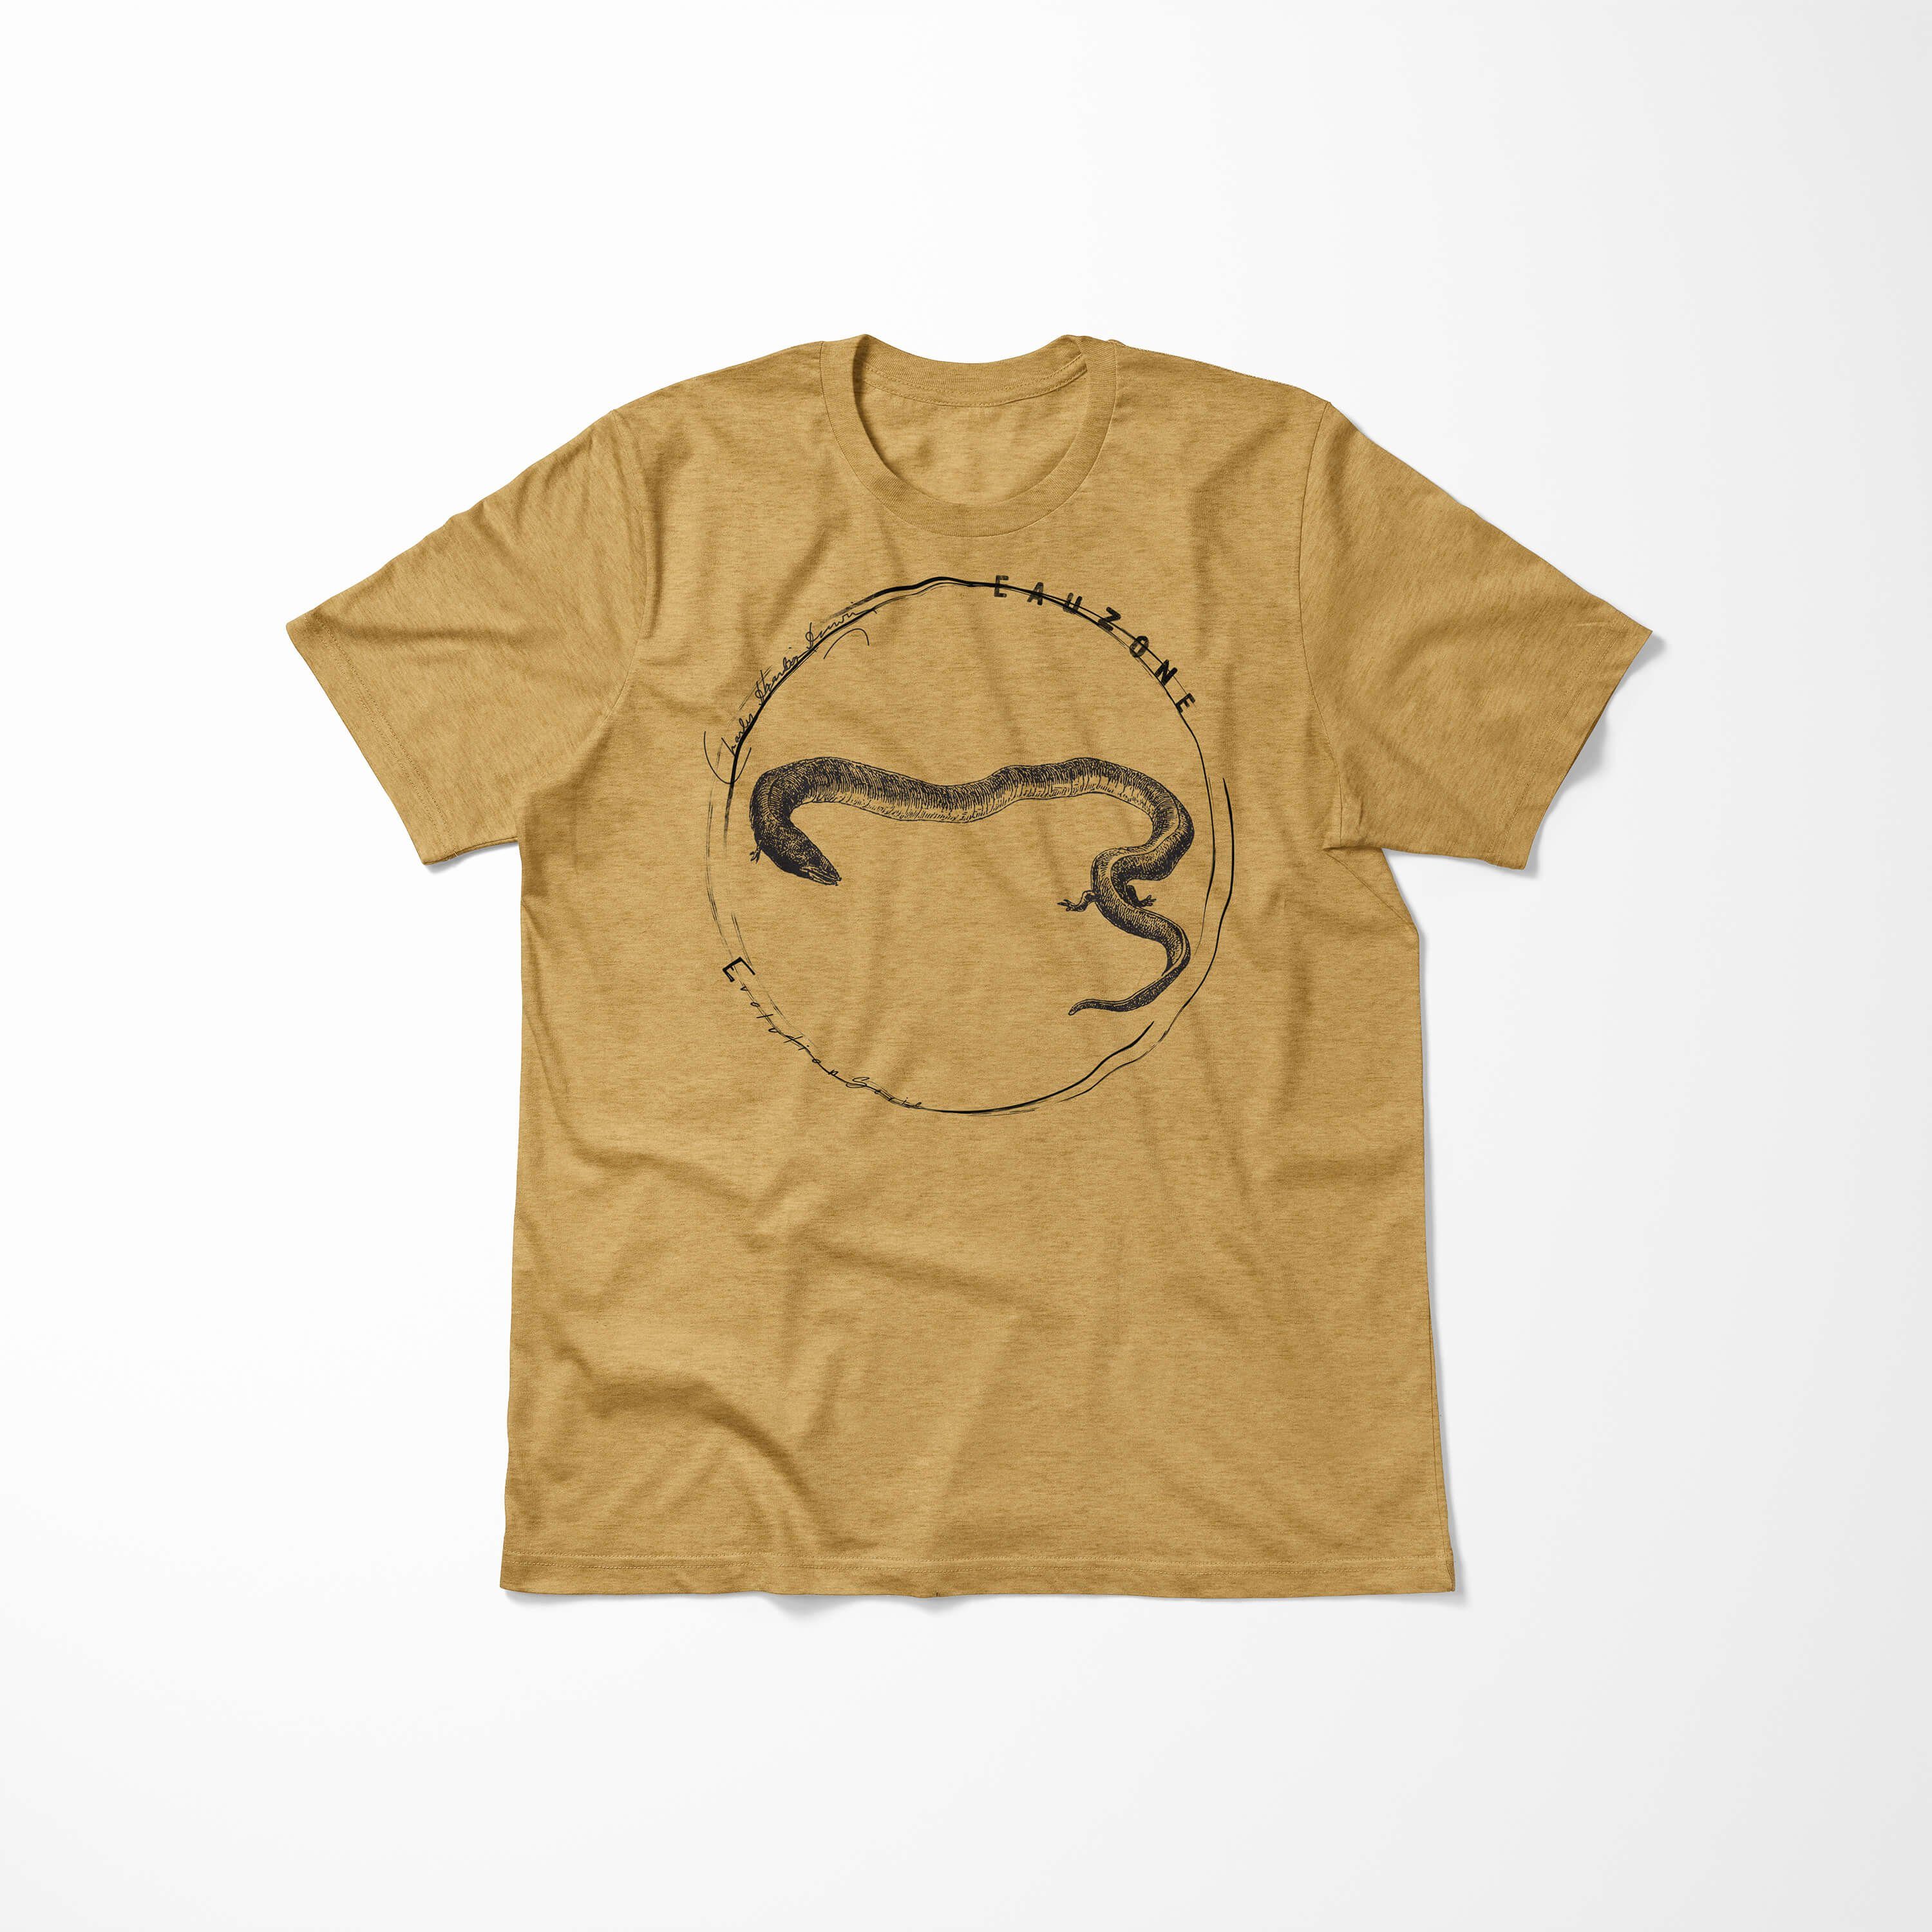 T-Shirt T-Shirt Herren Antique Gold Art Amphia Evolution Sinus